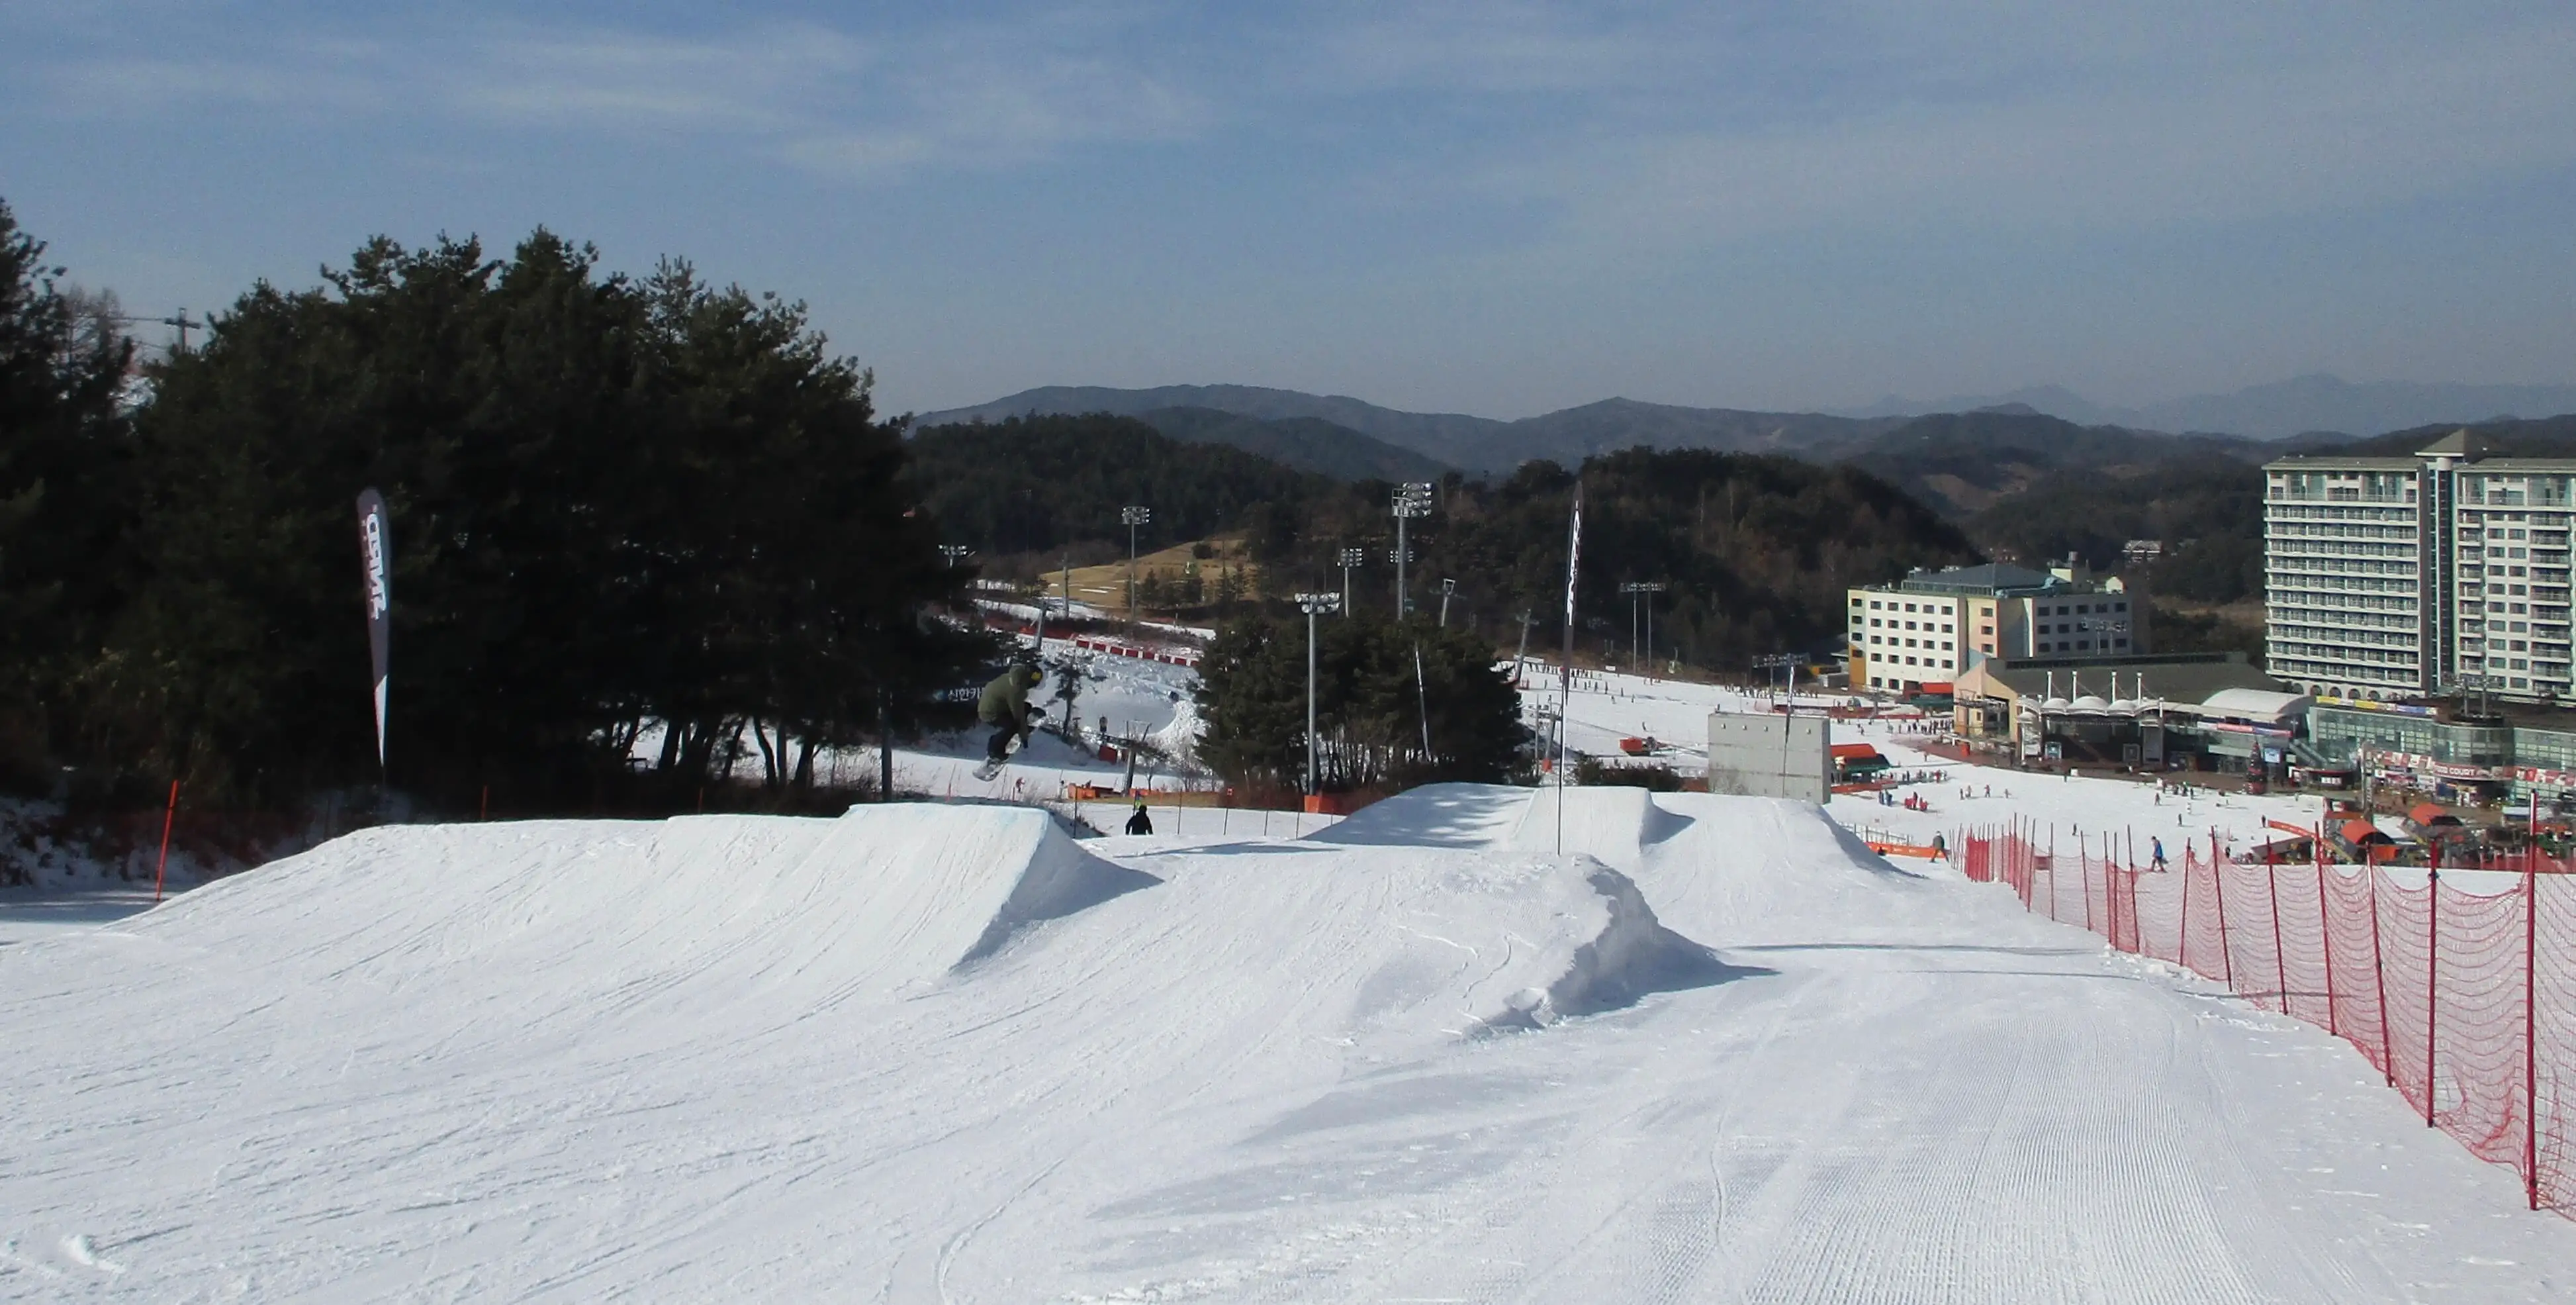 Snowboard jumps at Welli Hilli Park, Korea